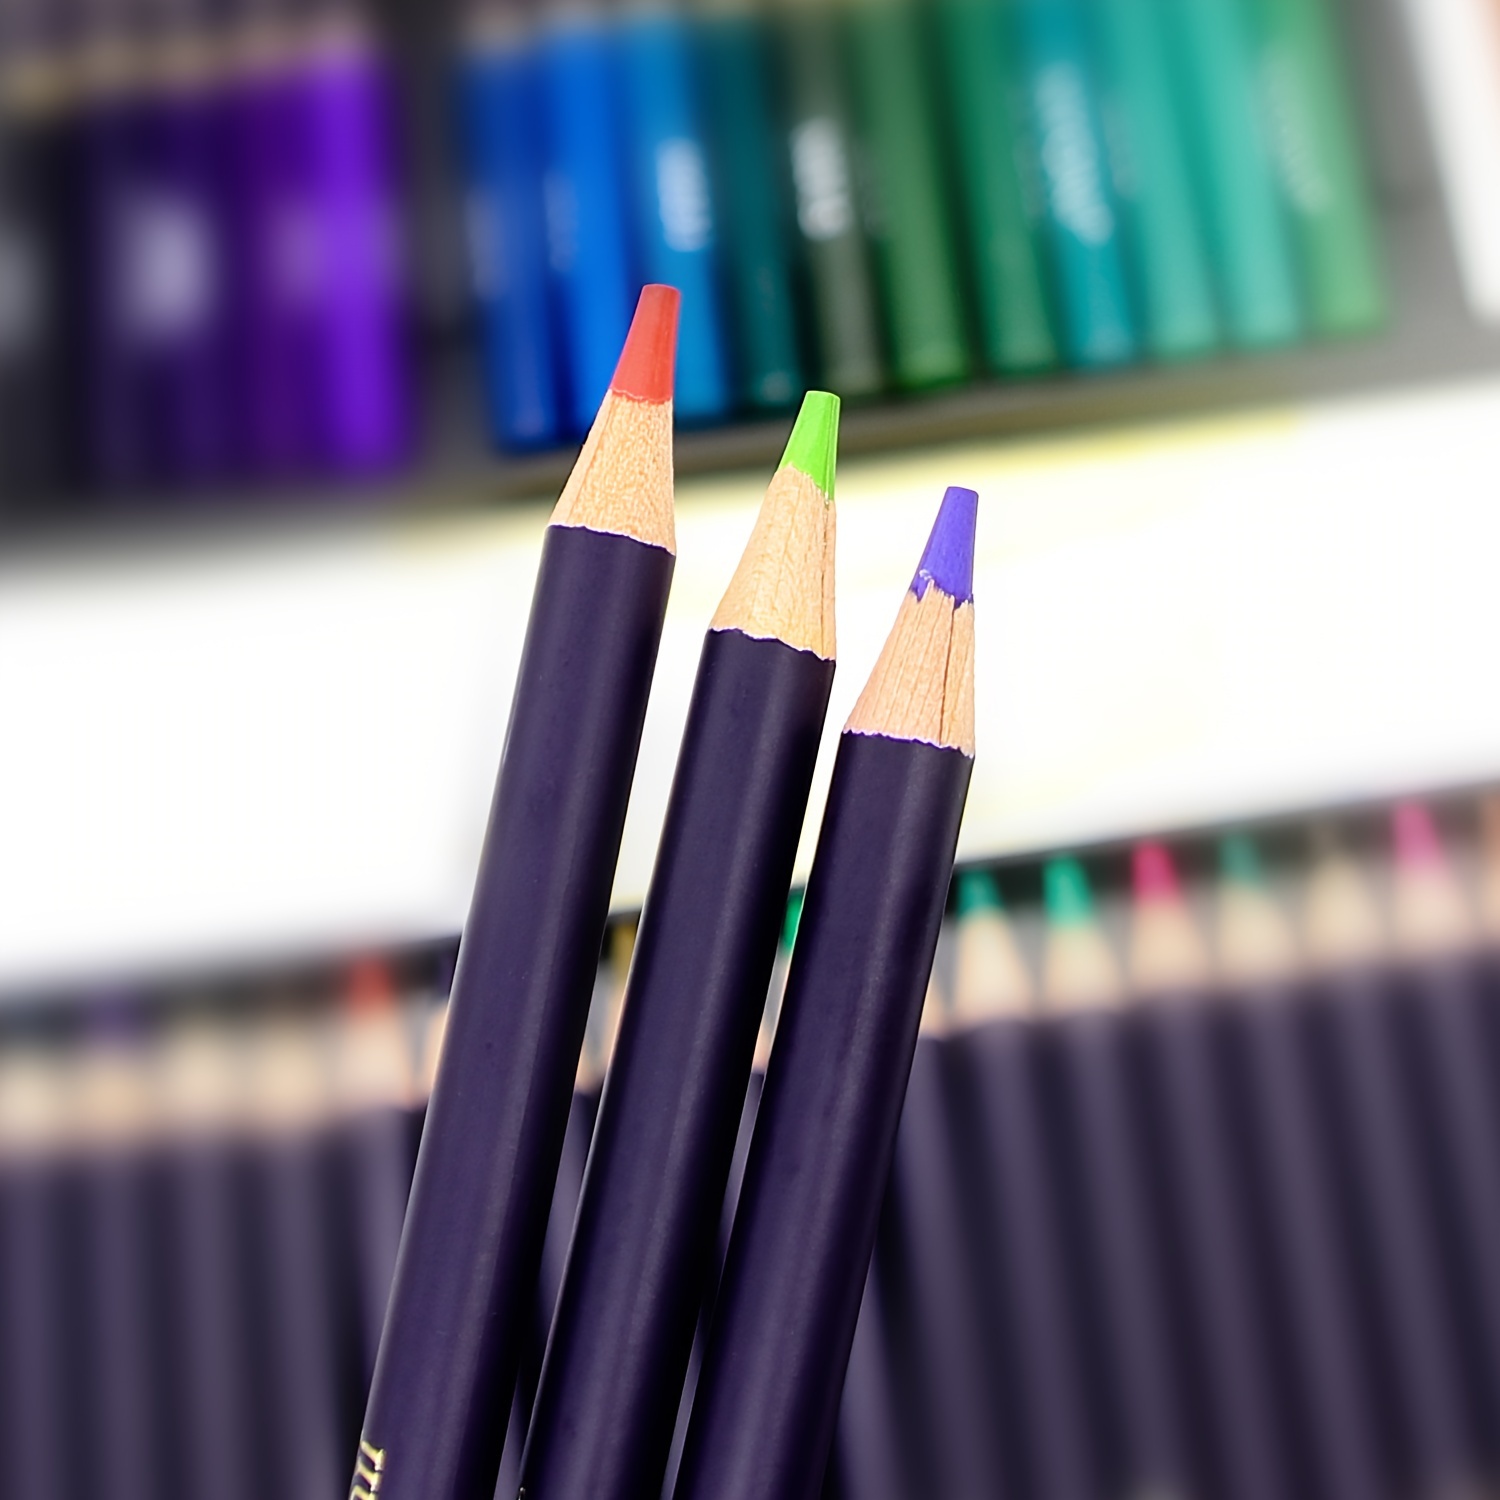 Professional Watercolor Pencils 72 Colors numbered - Temu